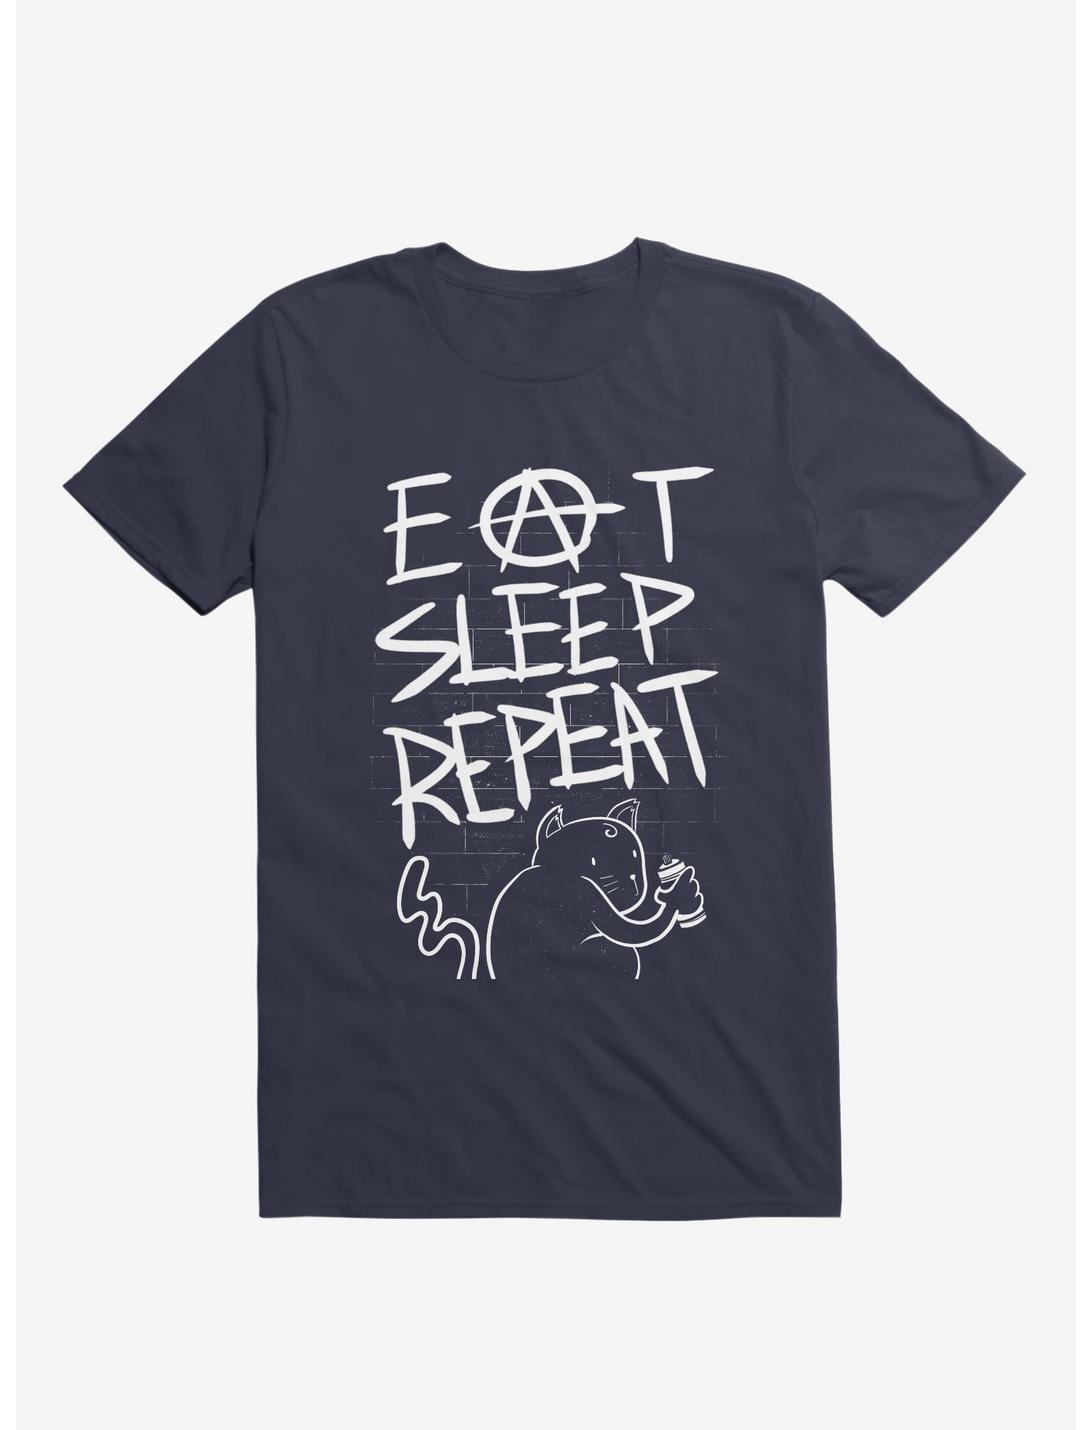 Eat Sleep Repeat T-Shirt, NAVY, hi-res